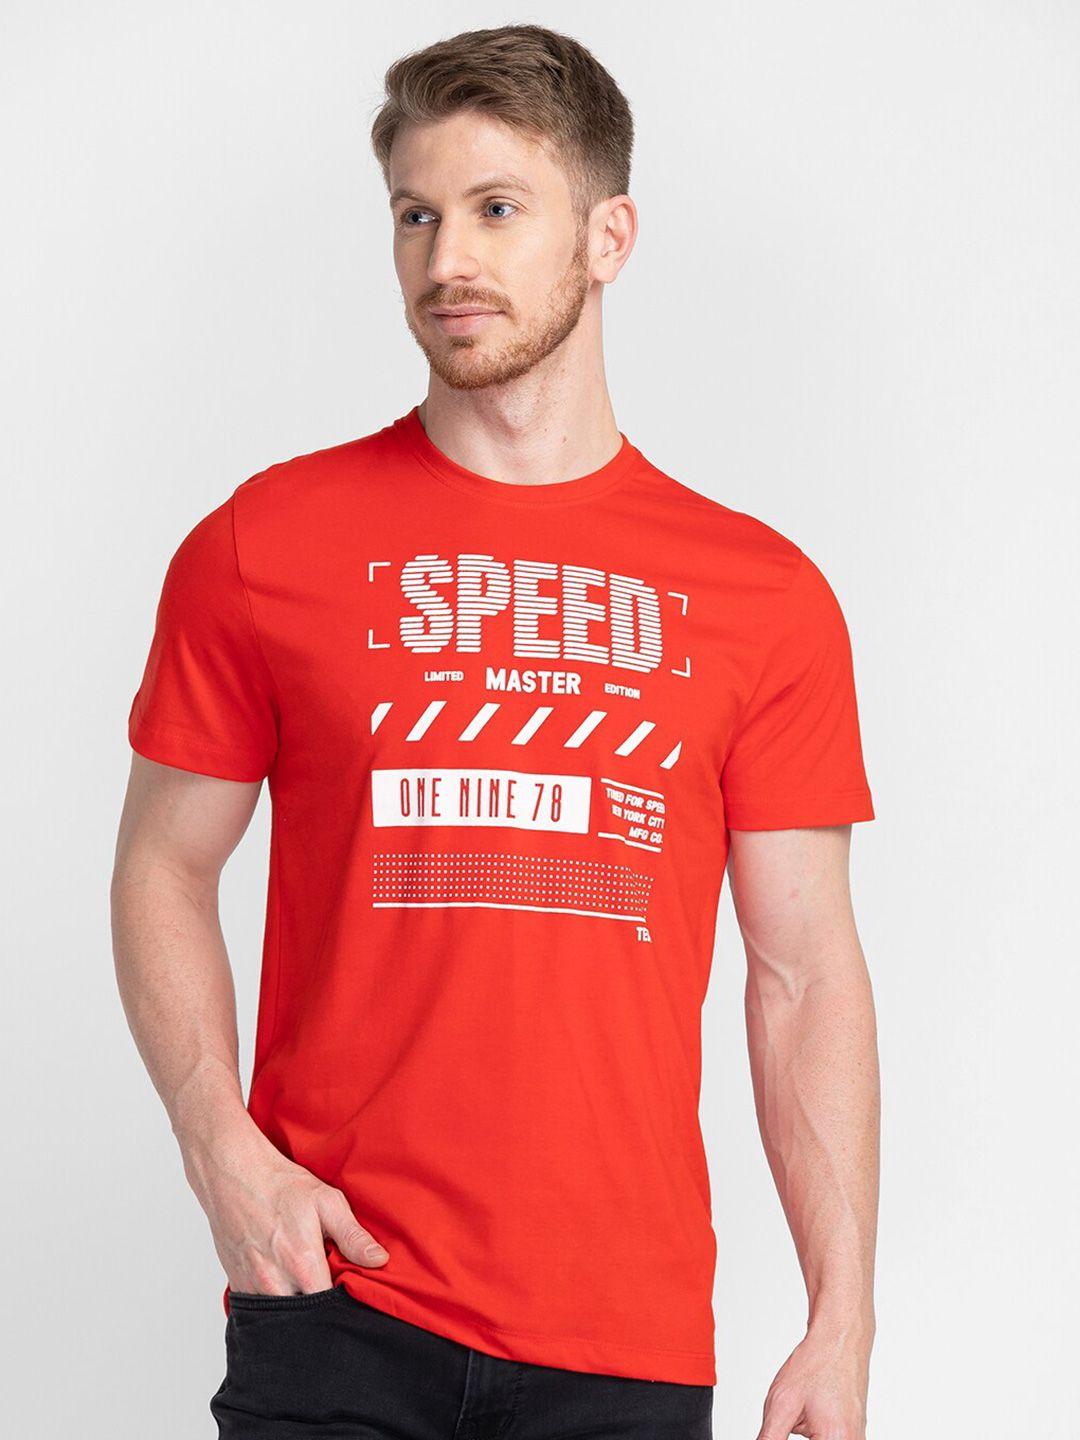 tessio men red typography printed t-shirt